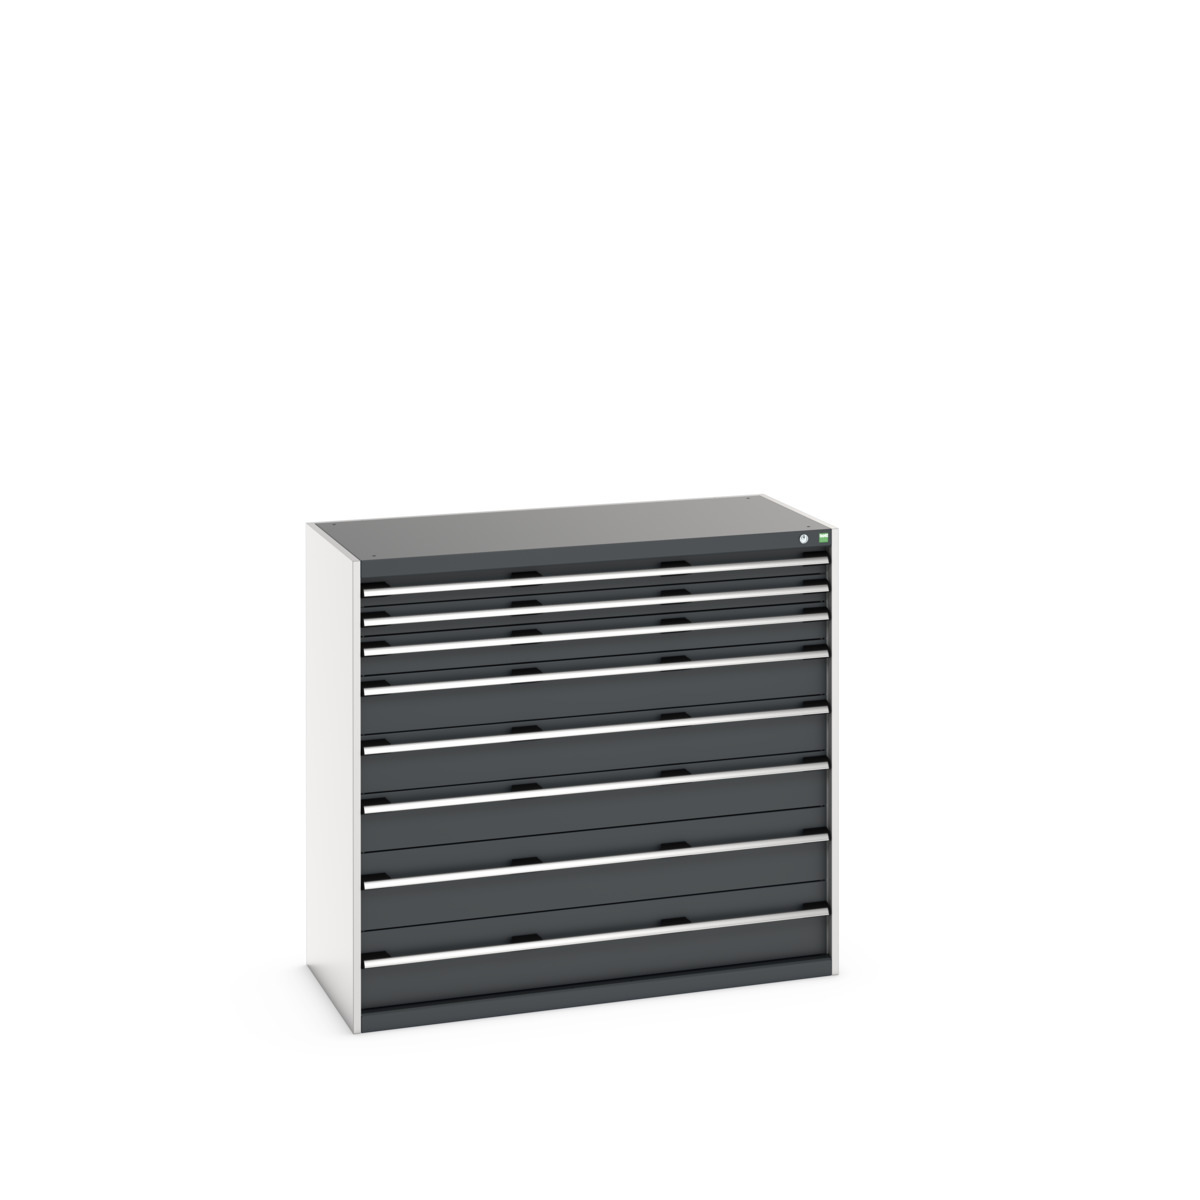 40022129. - cubio drawer cabinet